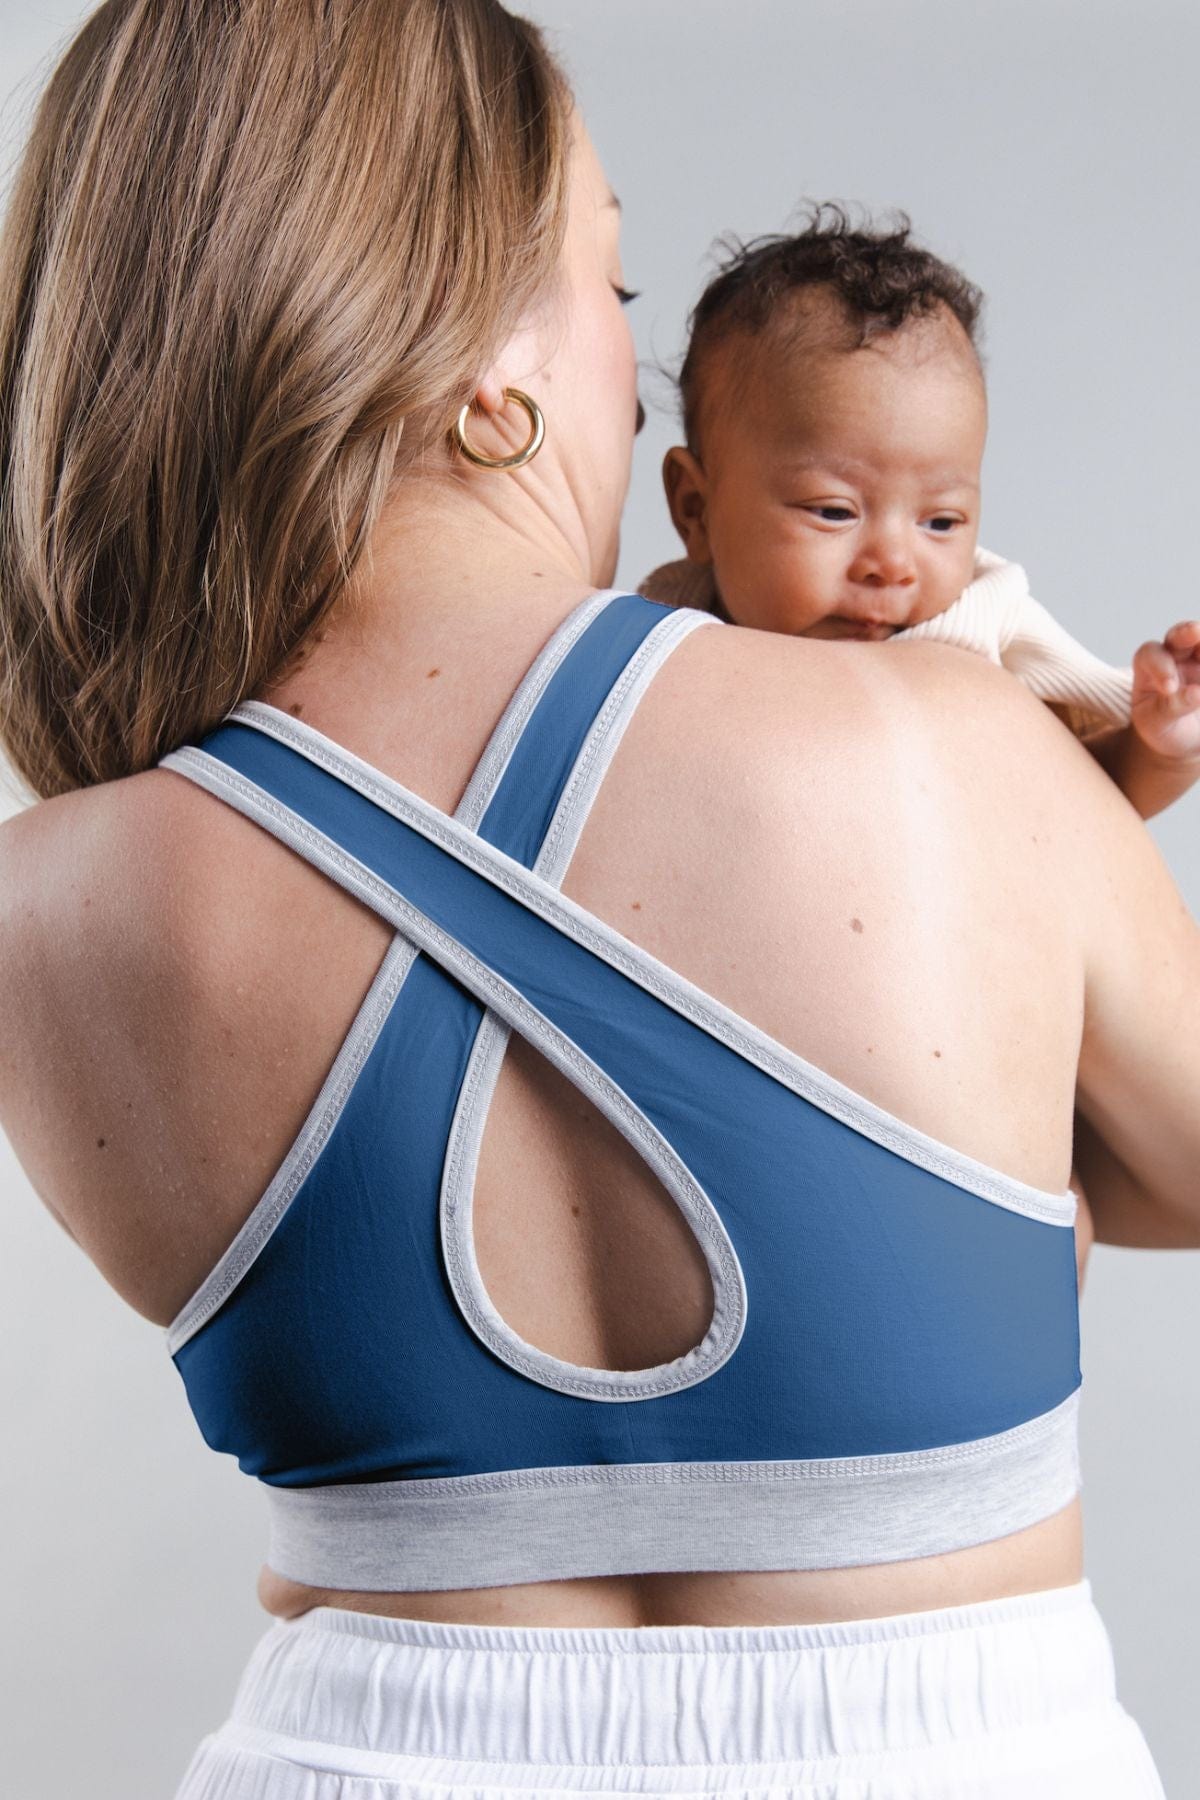 Undercover Maternity, Nursing & Beyond T-Shirt Bra™